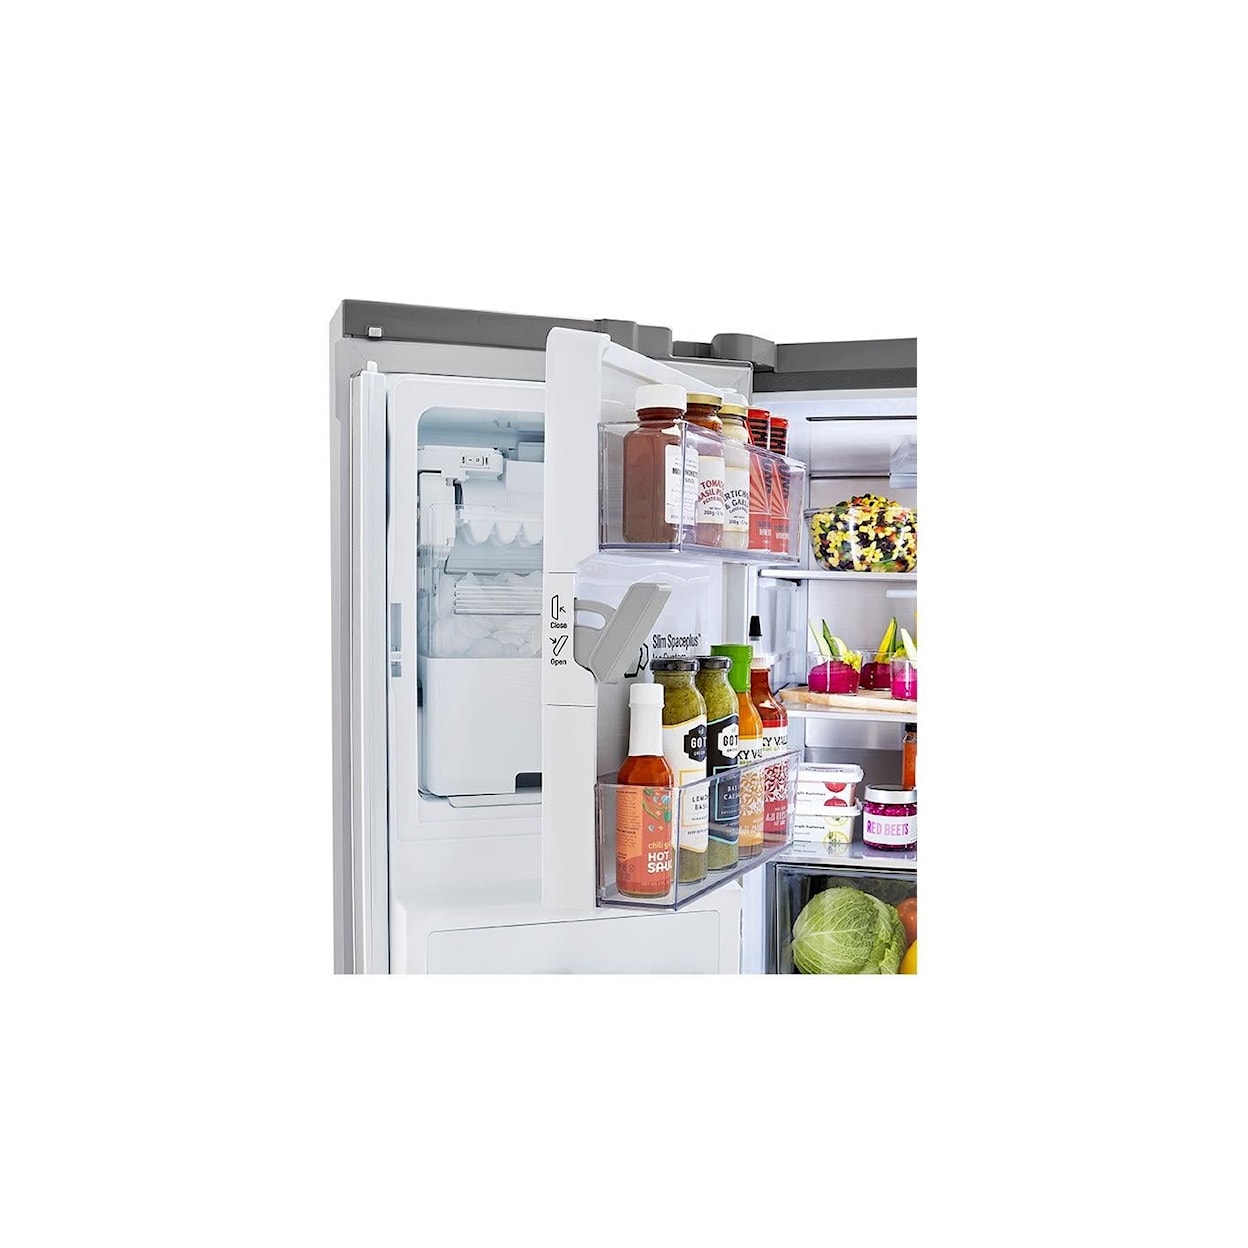 LG Appliances Refrigerators French Door Built In Refrigerator